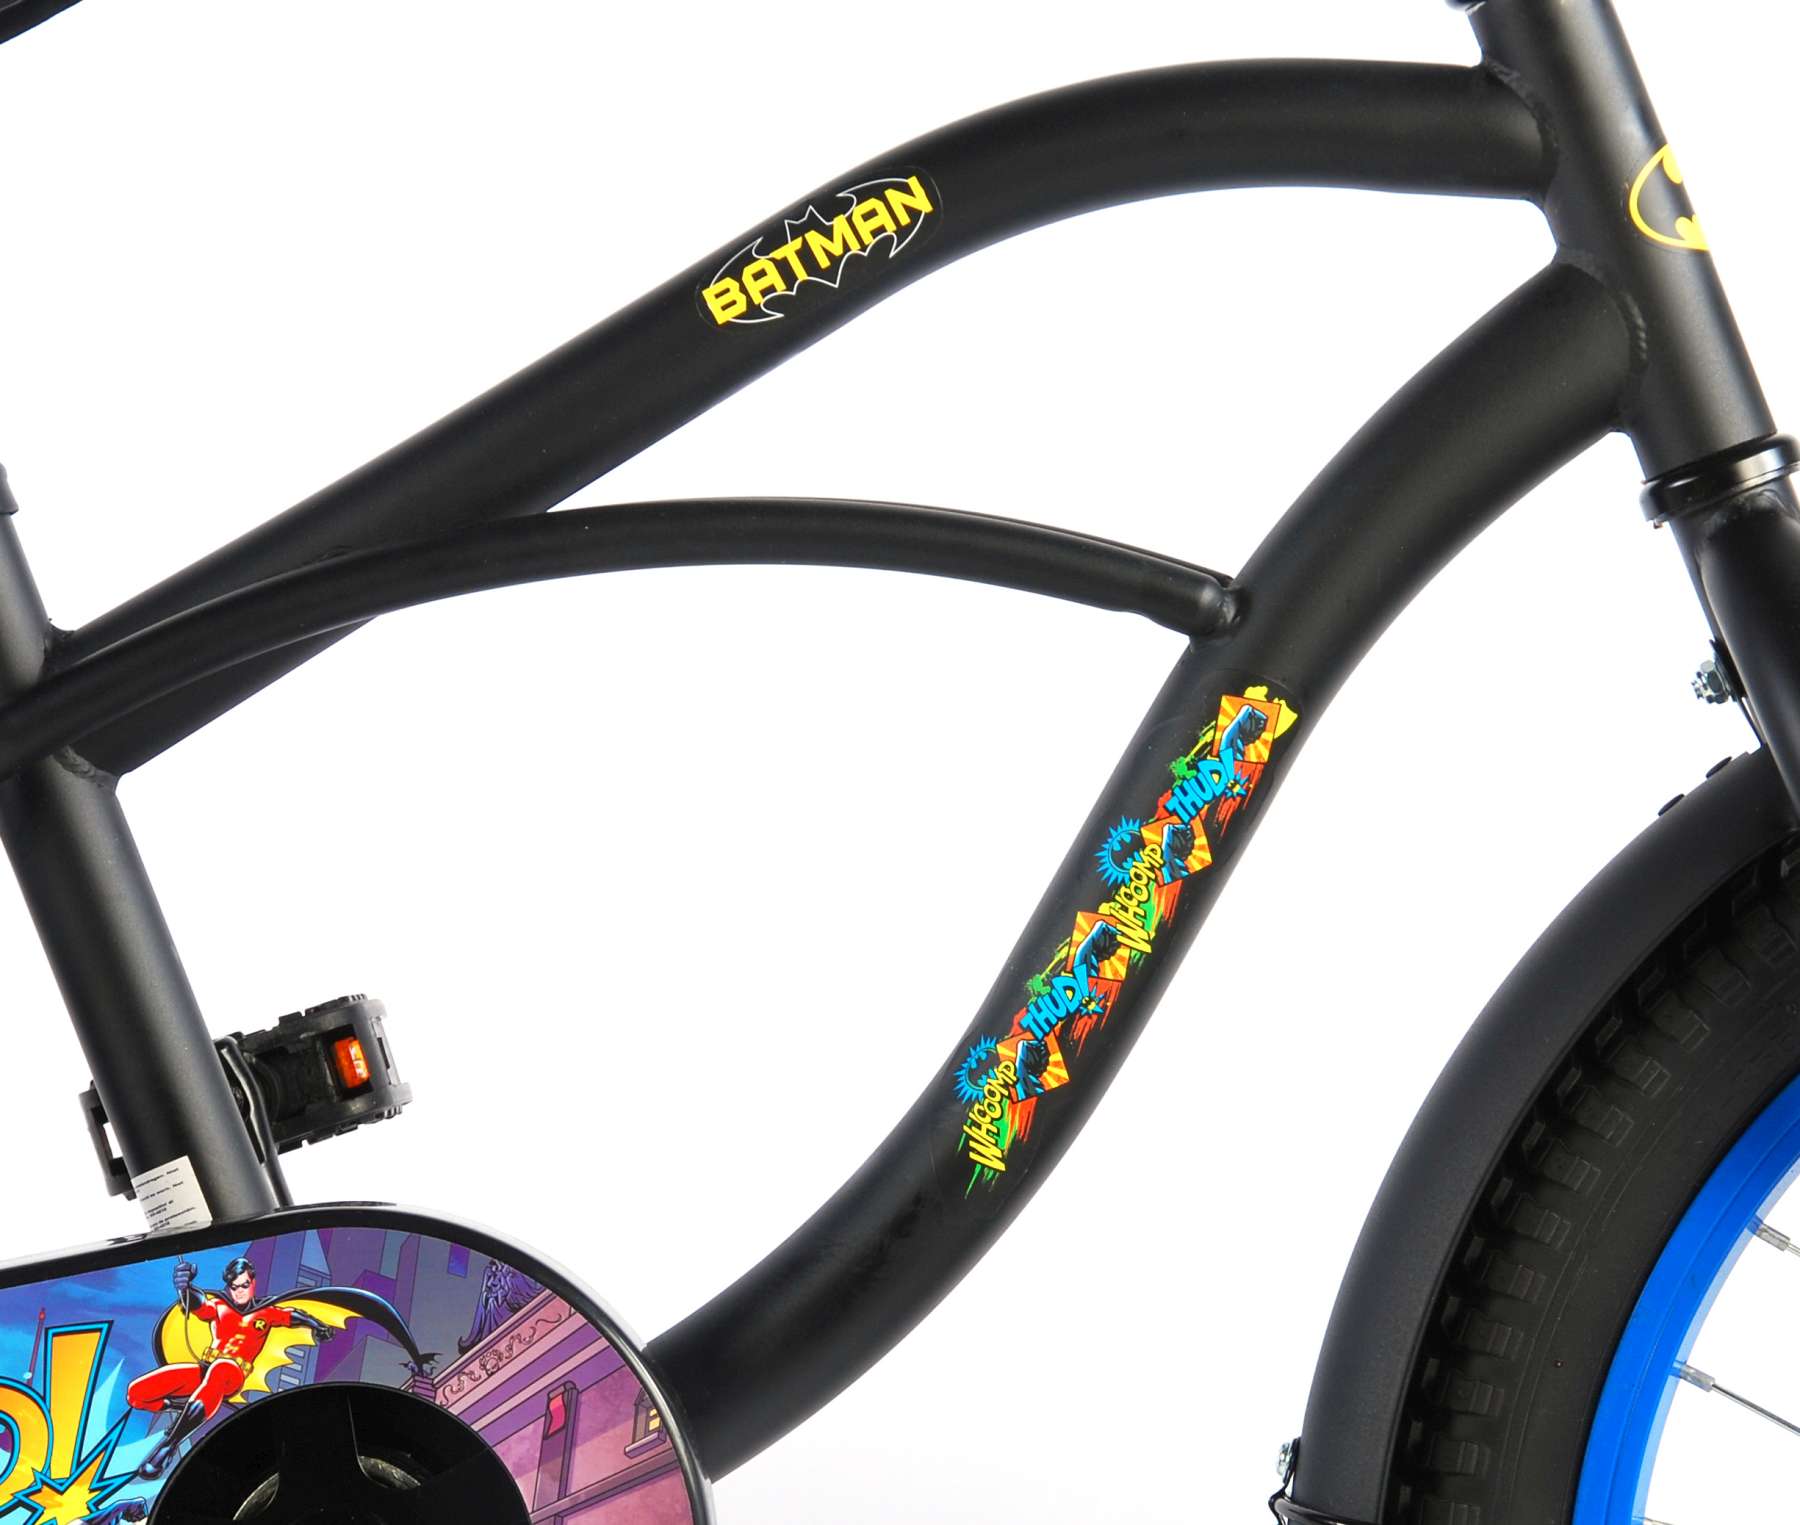 Kinderfahrrad Batman Fahrrad für Jungen 18 Zoll Kinderrad in Schwarz